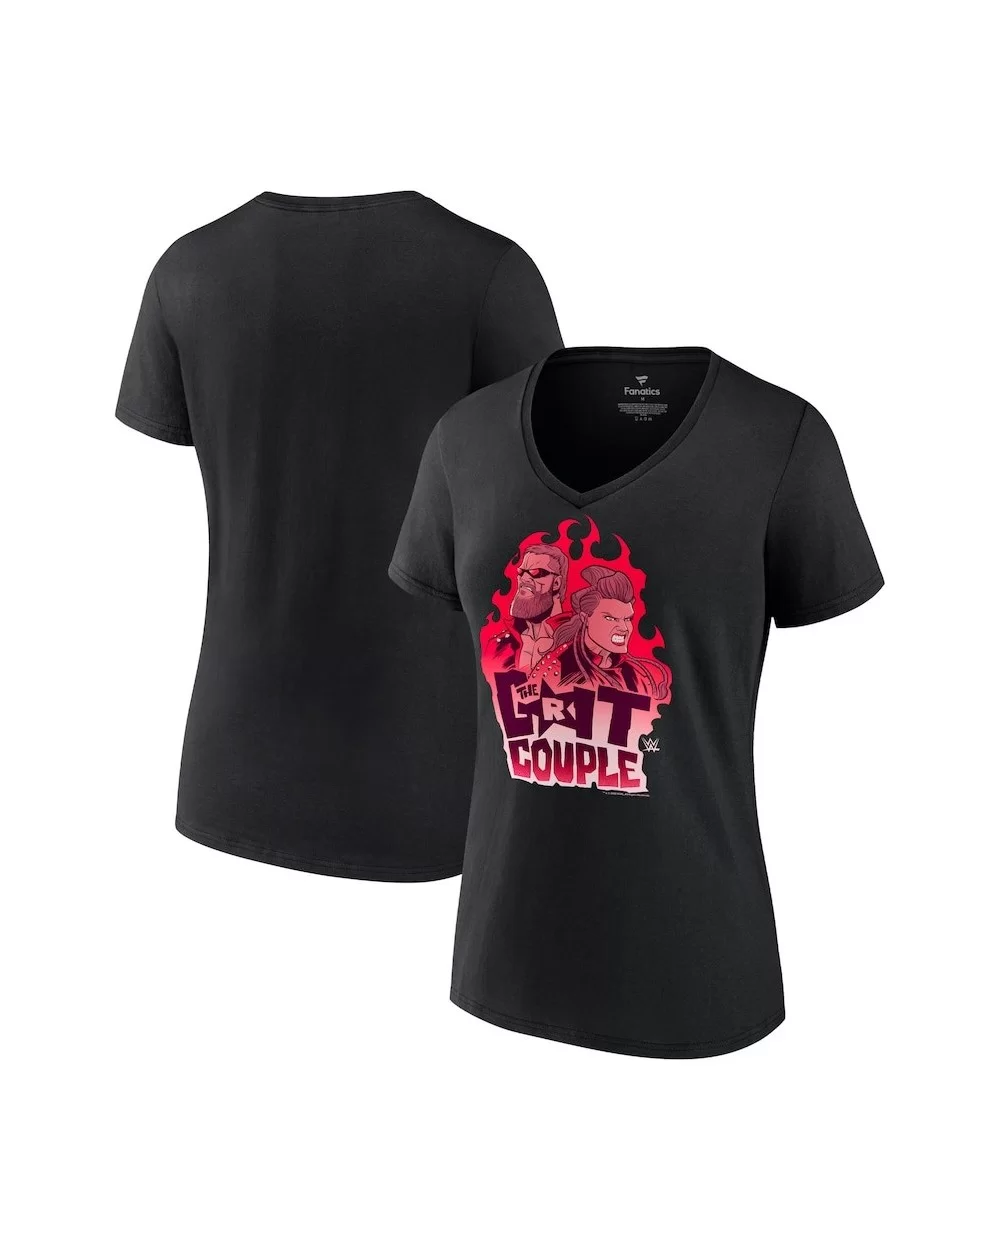 Women's Fanatics Branded Black Edge & Beth Phoenix Grit Couple V-Neck T-Shirt $7.68 T-Shirts